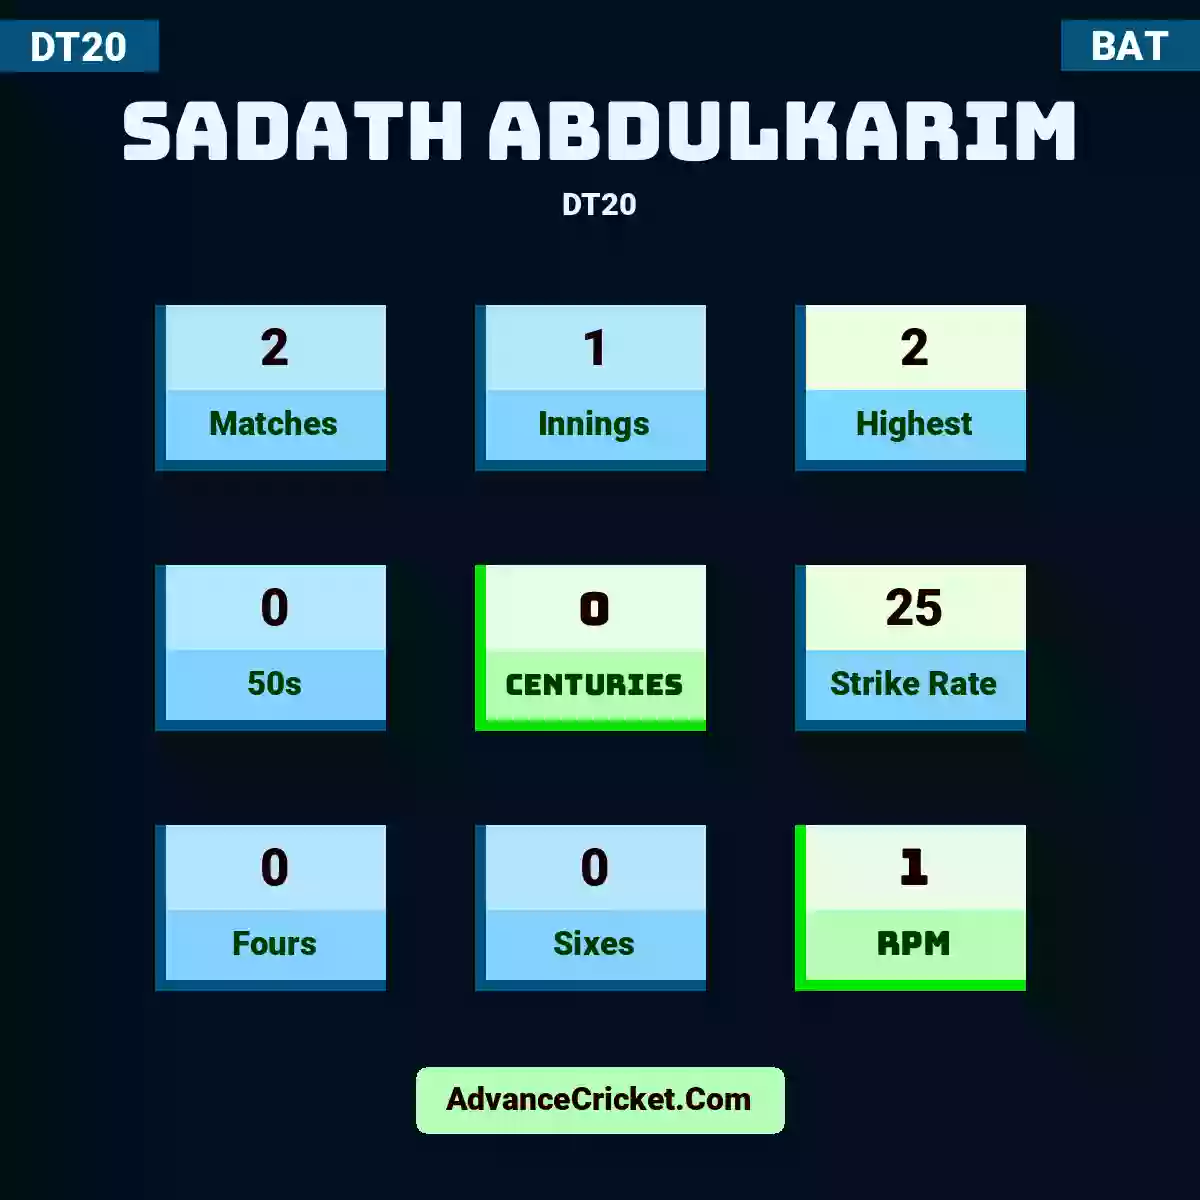 Sadath Abdulkarim DT20 , Sadath Abdulkarim played 2 matches, scored 2 runs as highest, 0 half-centuries, and 0 centuries, with a strike rate of 25. S.Abdulkarim hit 0 fours and 0 sixes, with an RPM of 1.